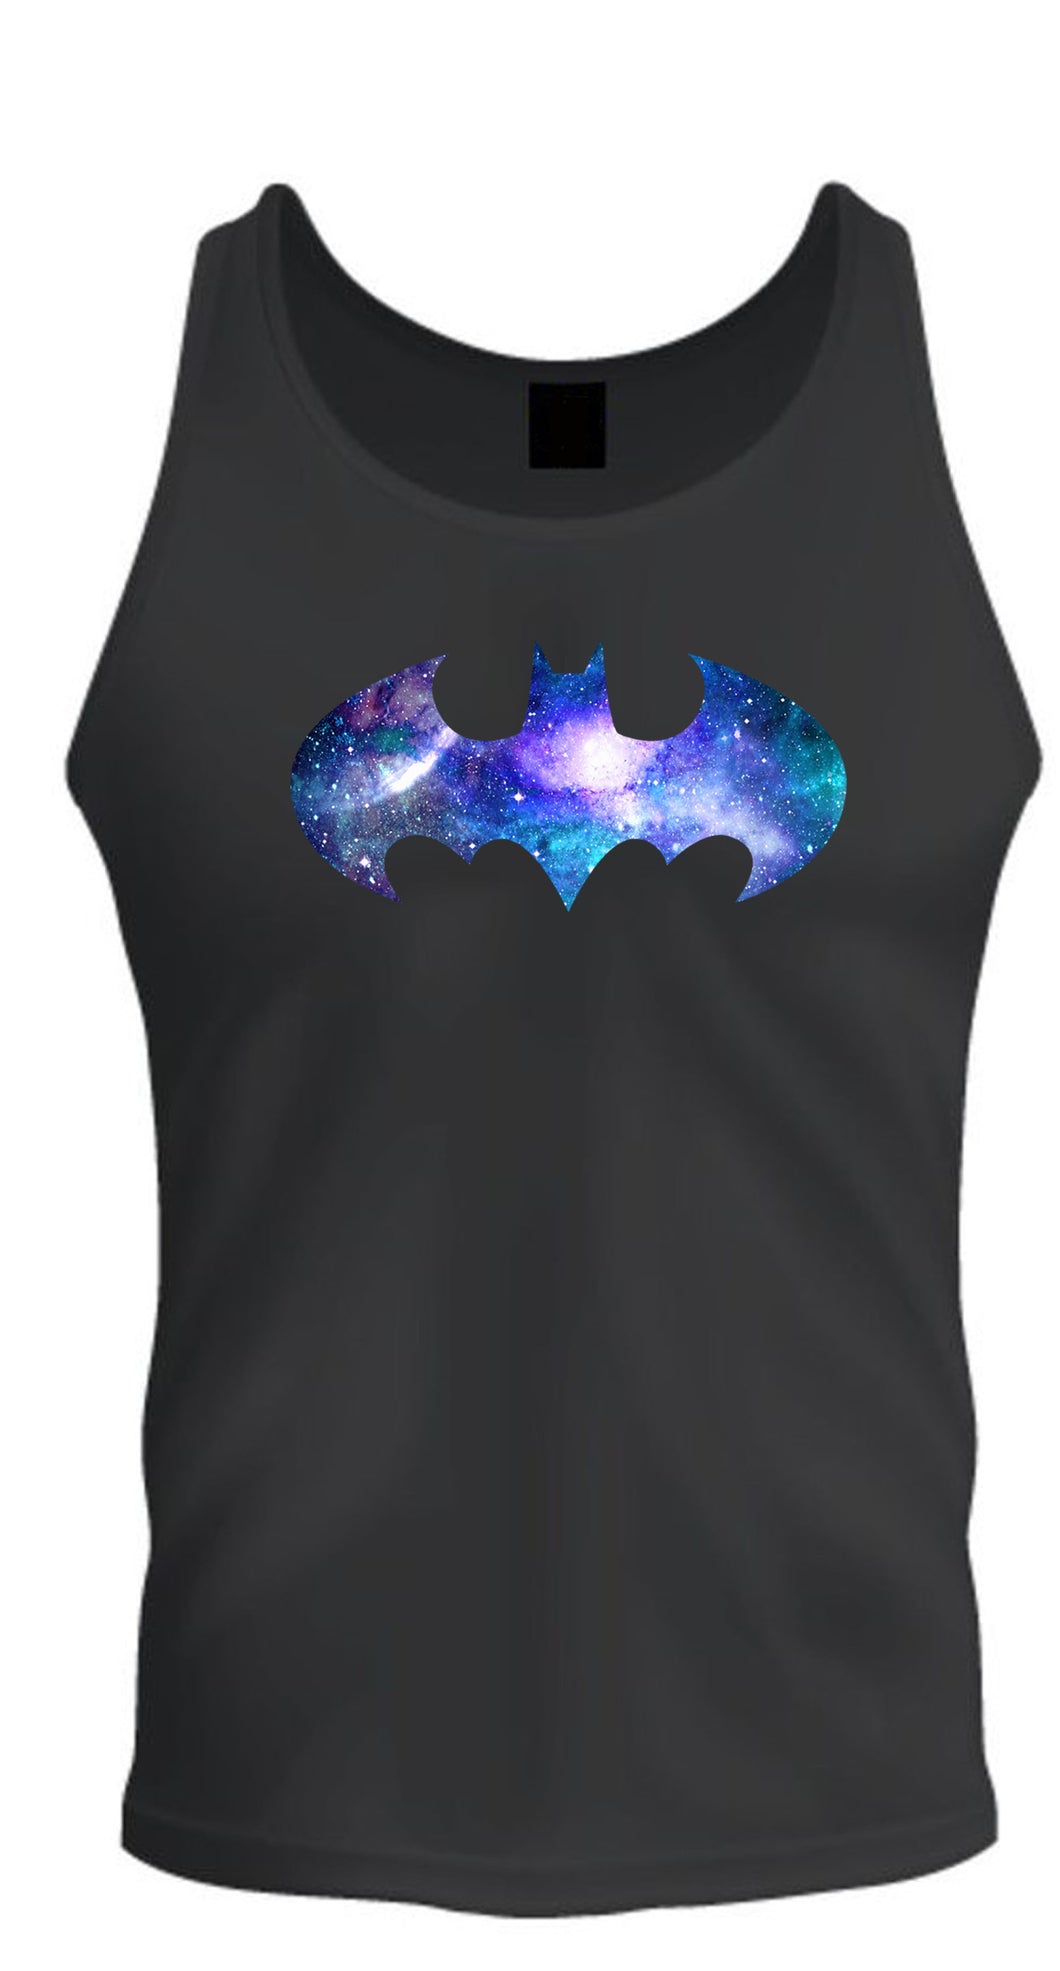 galaxy batman tee tank top s-2xl